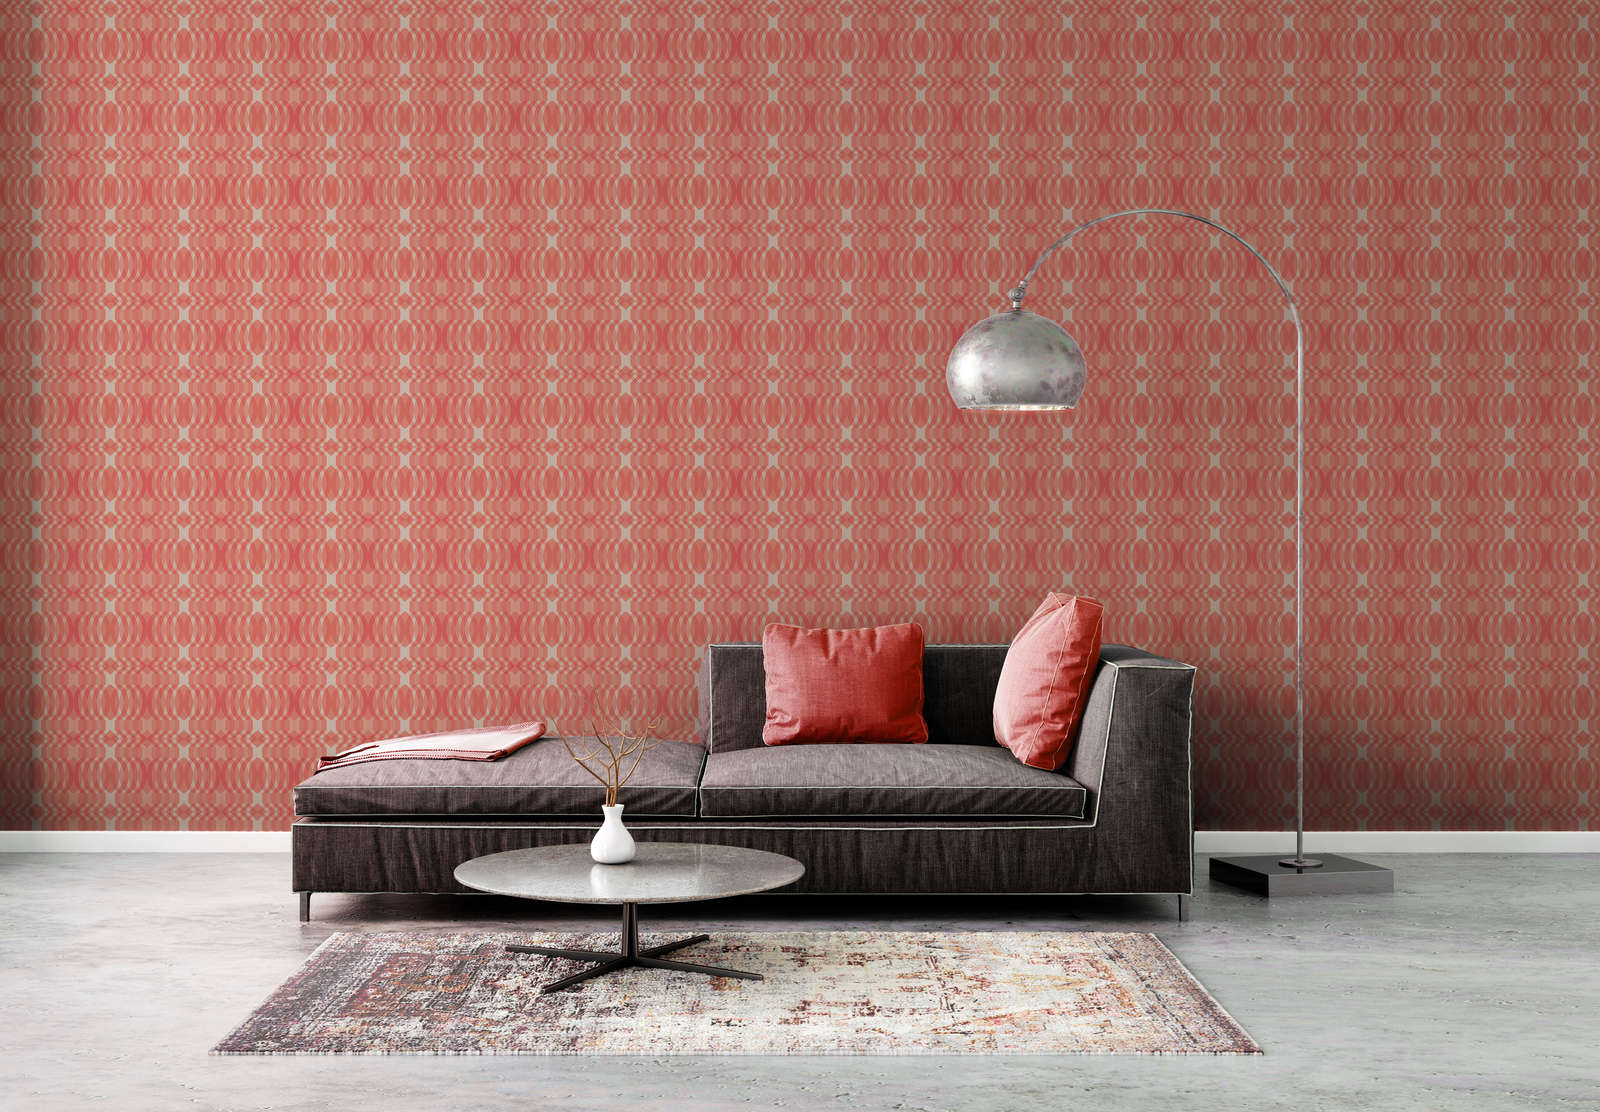             Geometrisch patroon op vliesbehang in retrostijl - rood, crème, wit
        